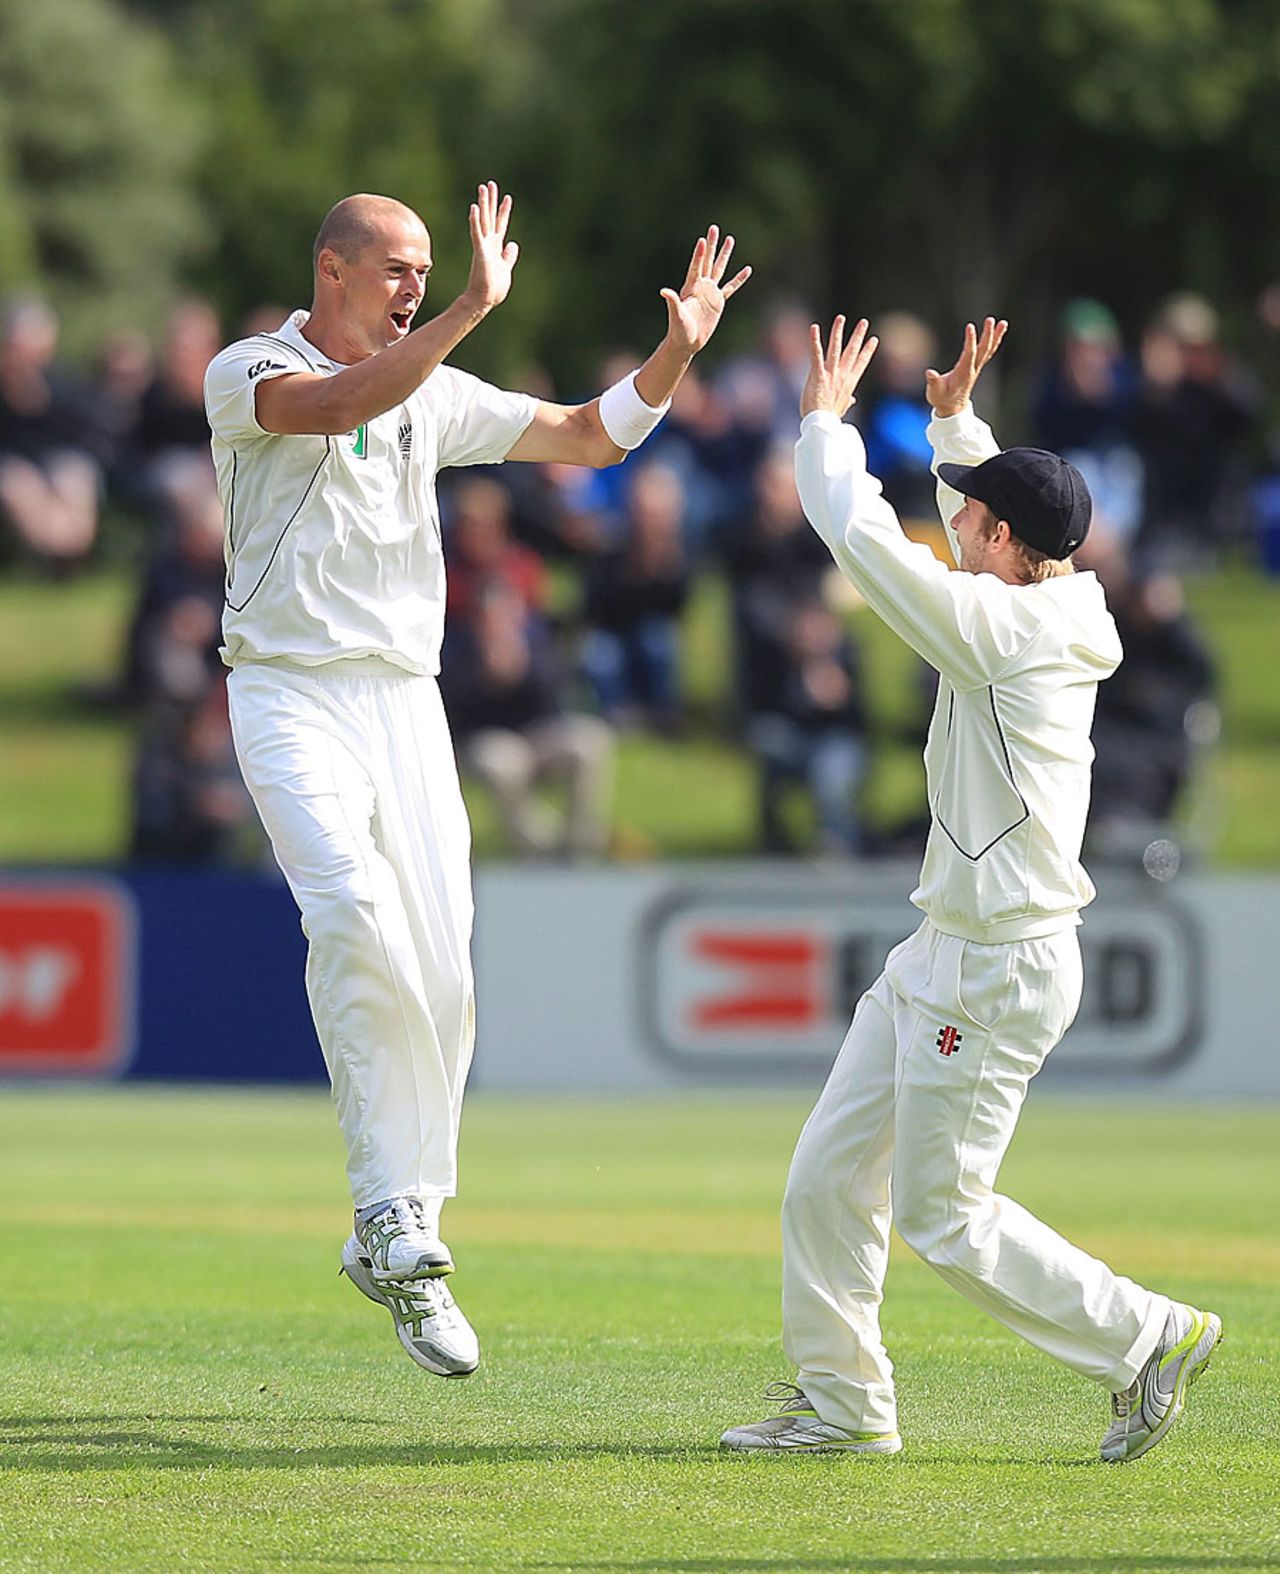 Chris Martin celebrates dismissing Jacques Kallis, New Zealand v South Africa, 1st Test, Dunedin, 1st day, March 7, 2012